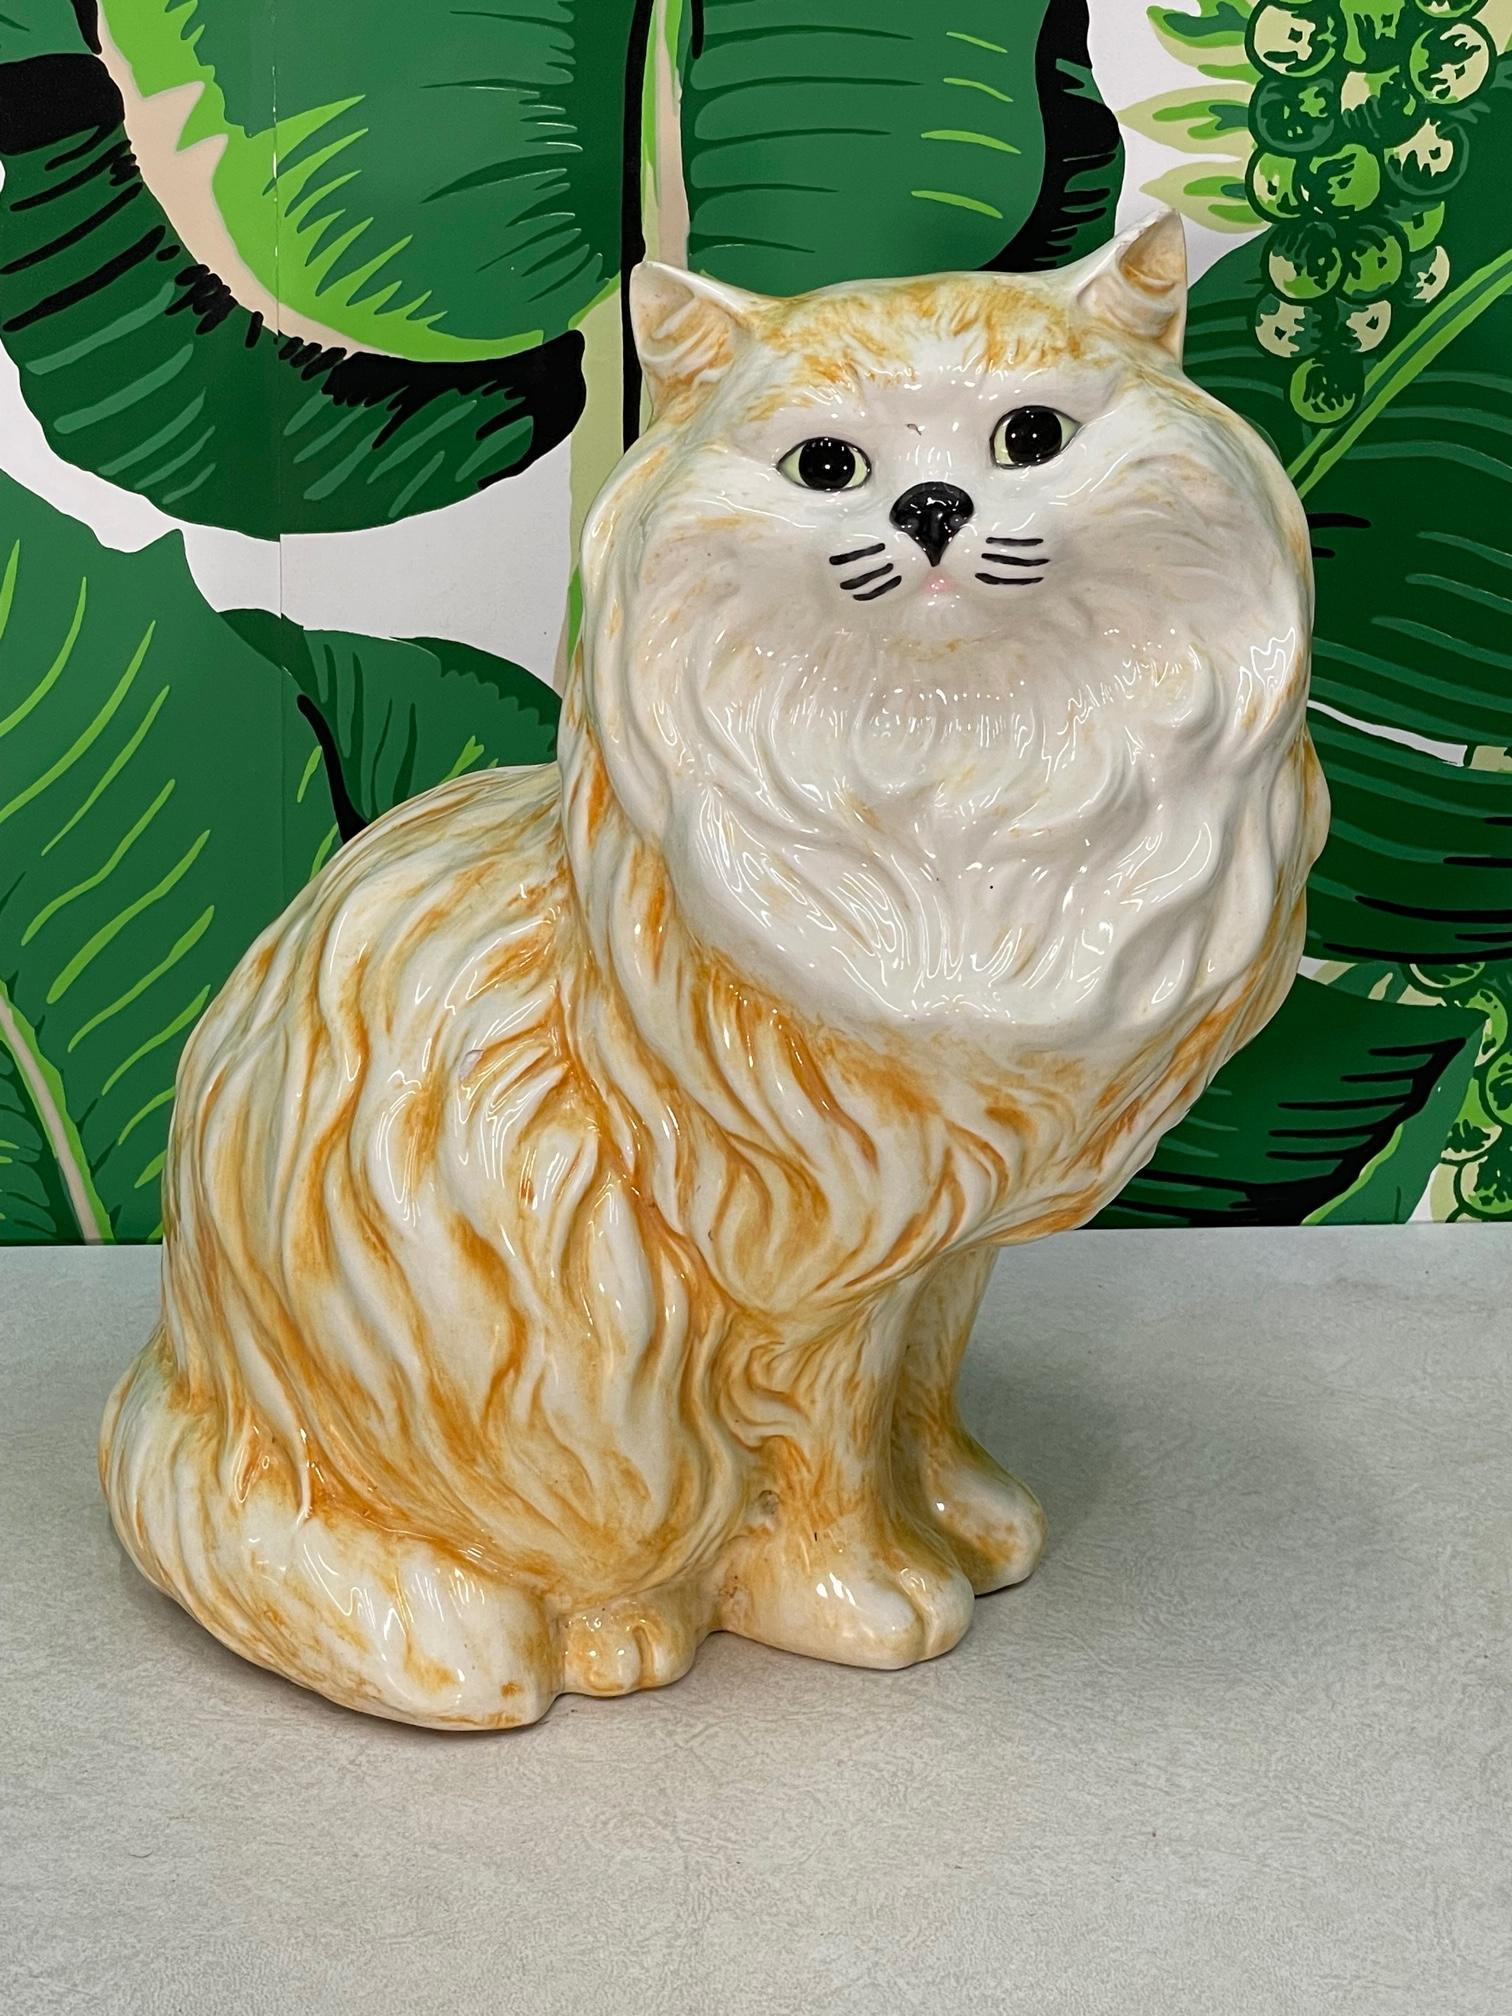 La grande statue de chat en céramique mesure 14